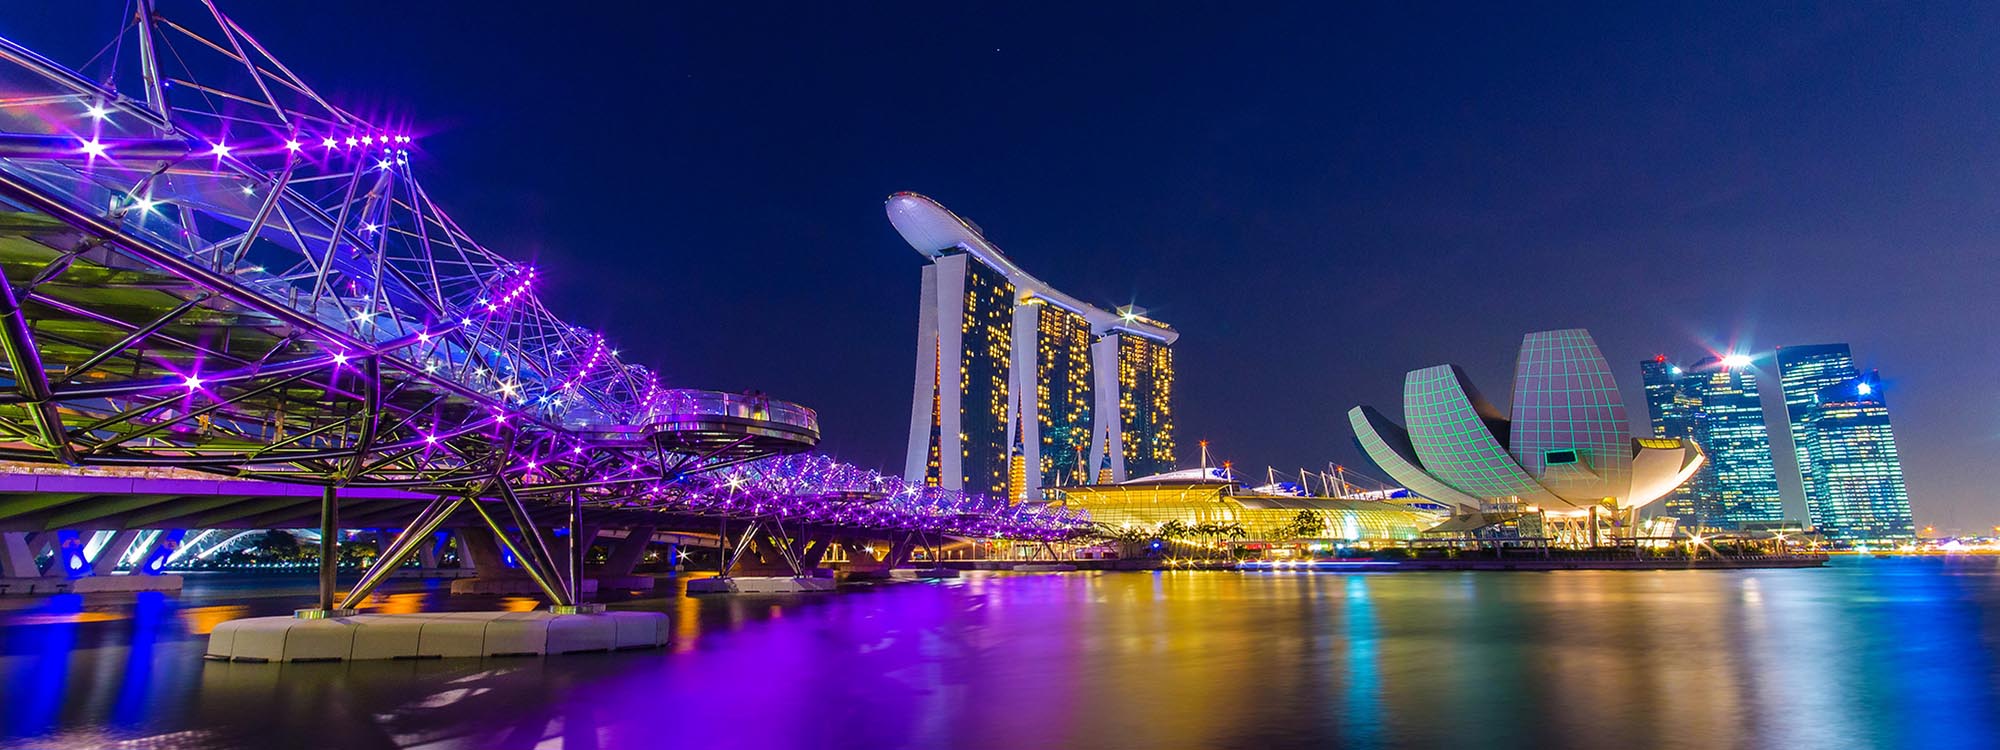 singapore bali cruise and stay